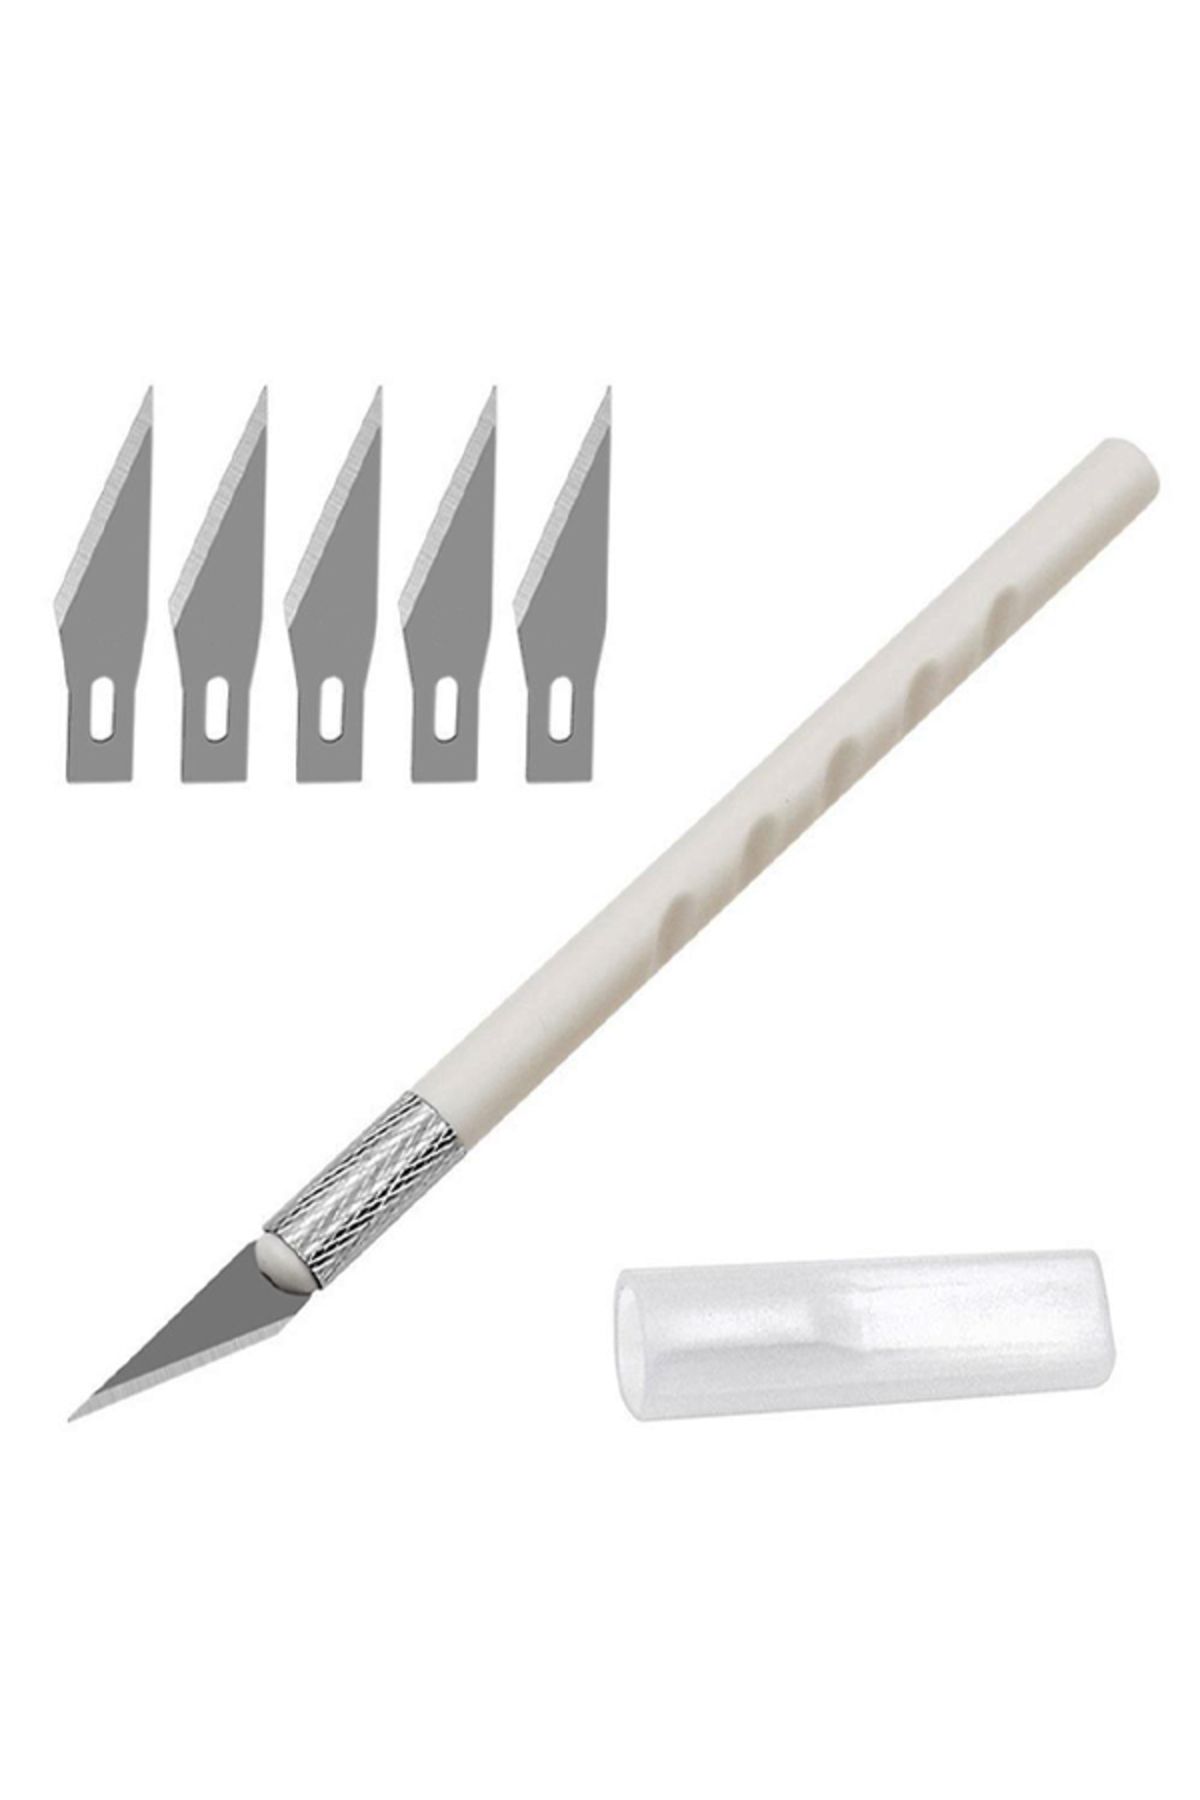 ACUTO Beyaz Kretuar Bıçağı Seti 5 Uç Yedekli Hobi Tasarım Neşter Set Hassas Kesim Bıçağı